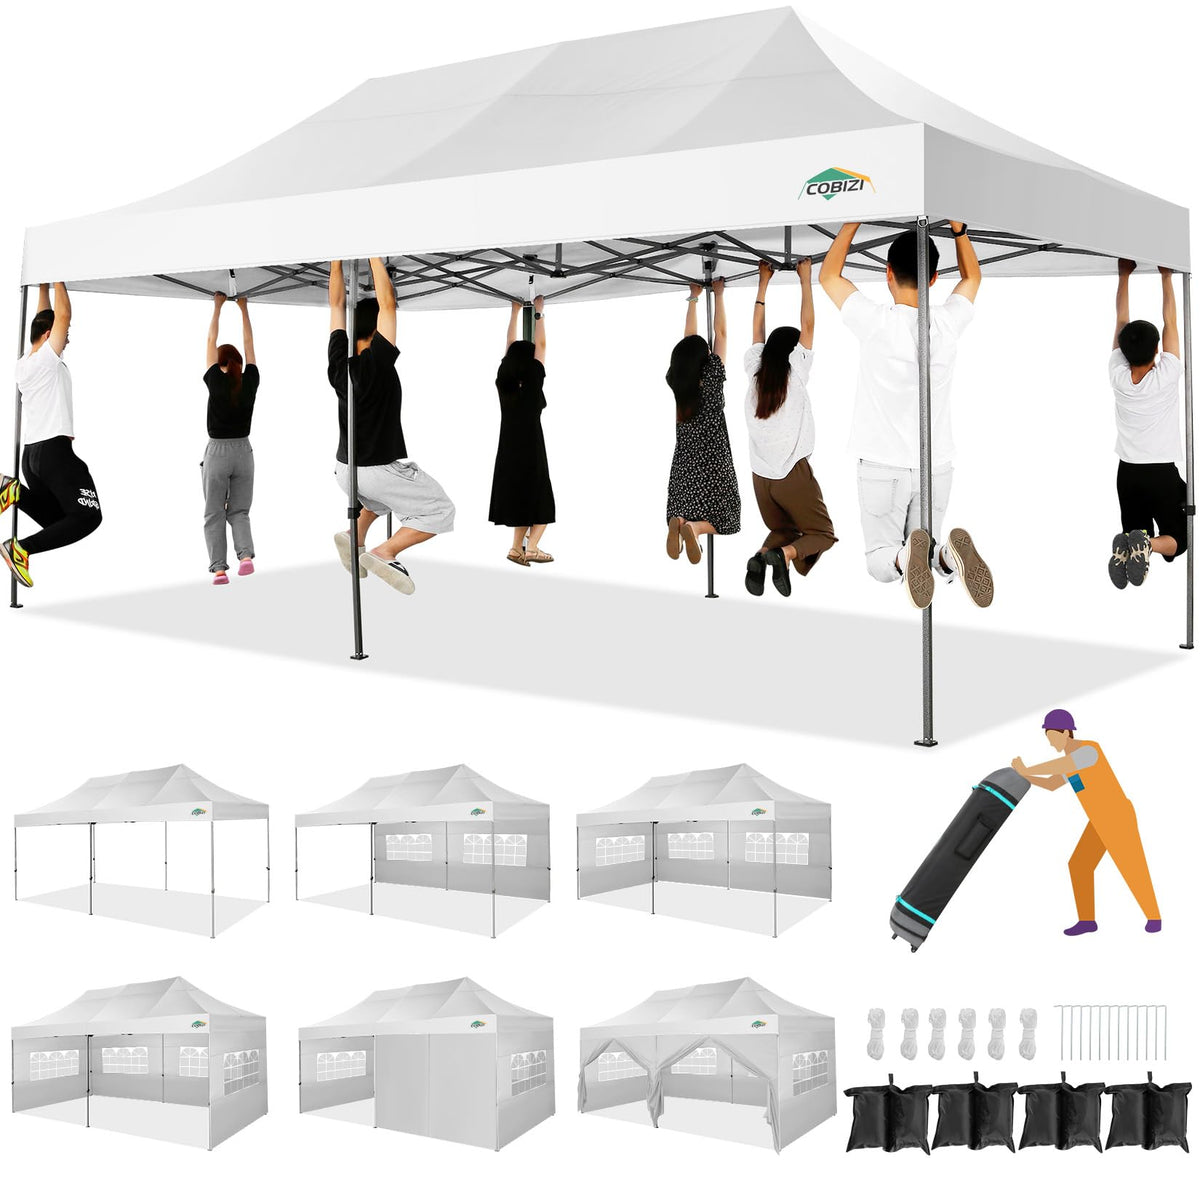 COBIZI 10'x20' Canopy EZ Pop Up Canopy Anti-UV Waterproof Outdoor Tent